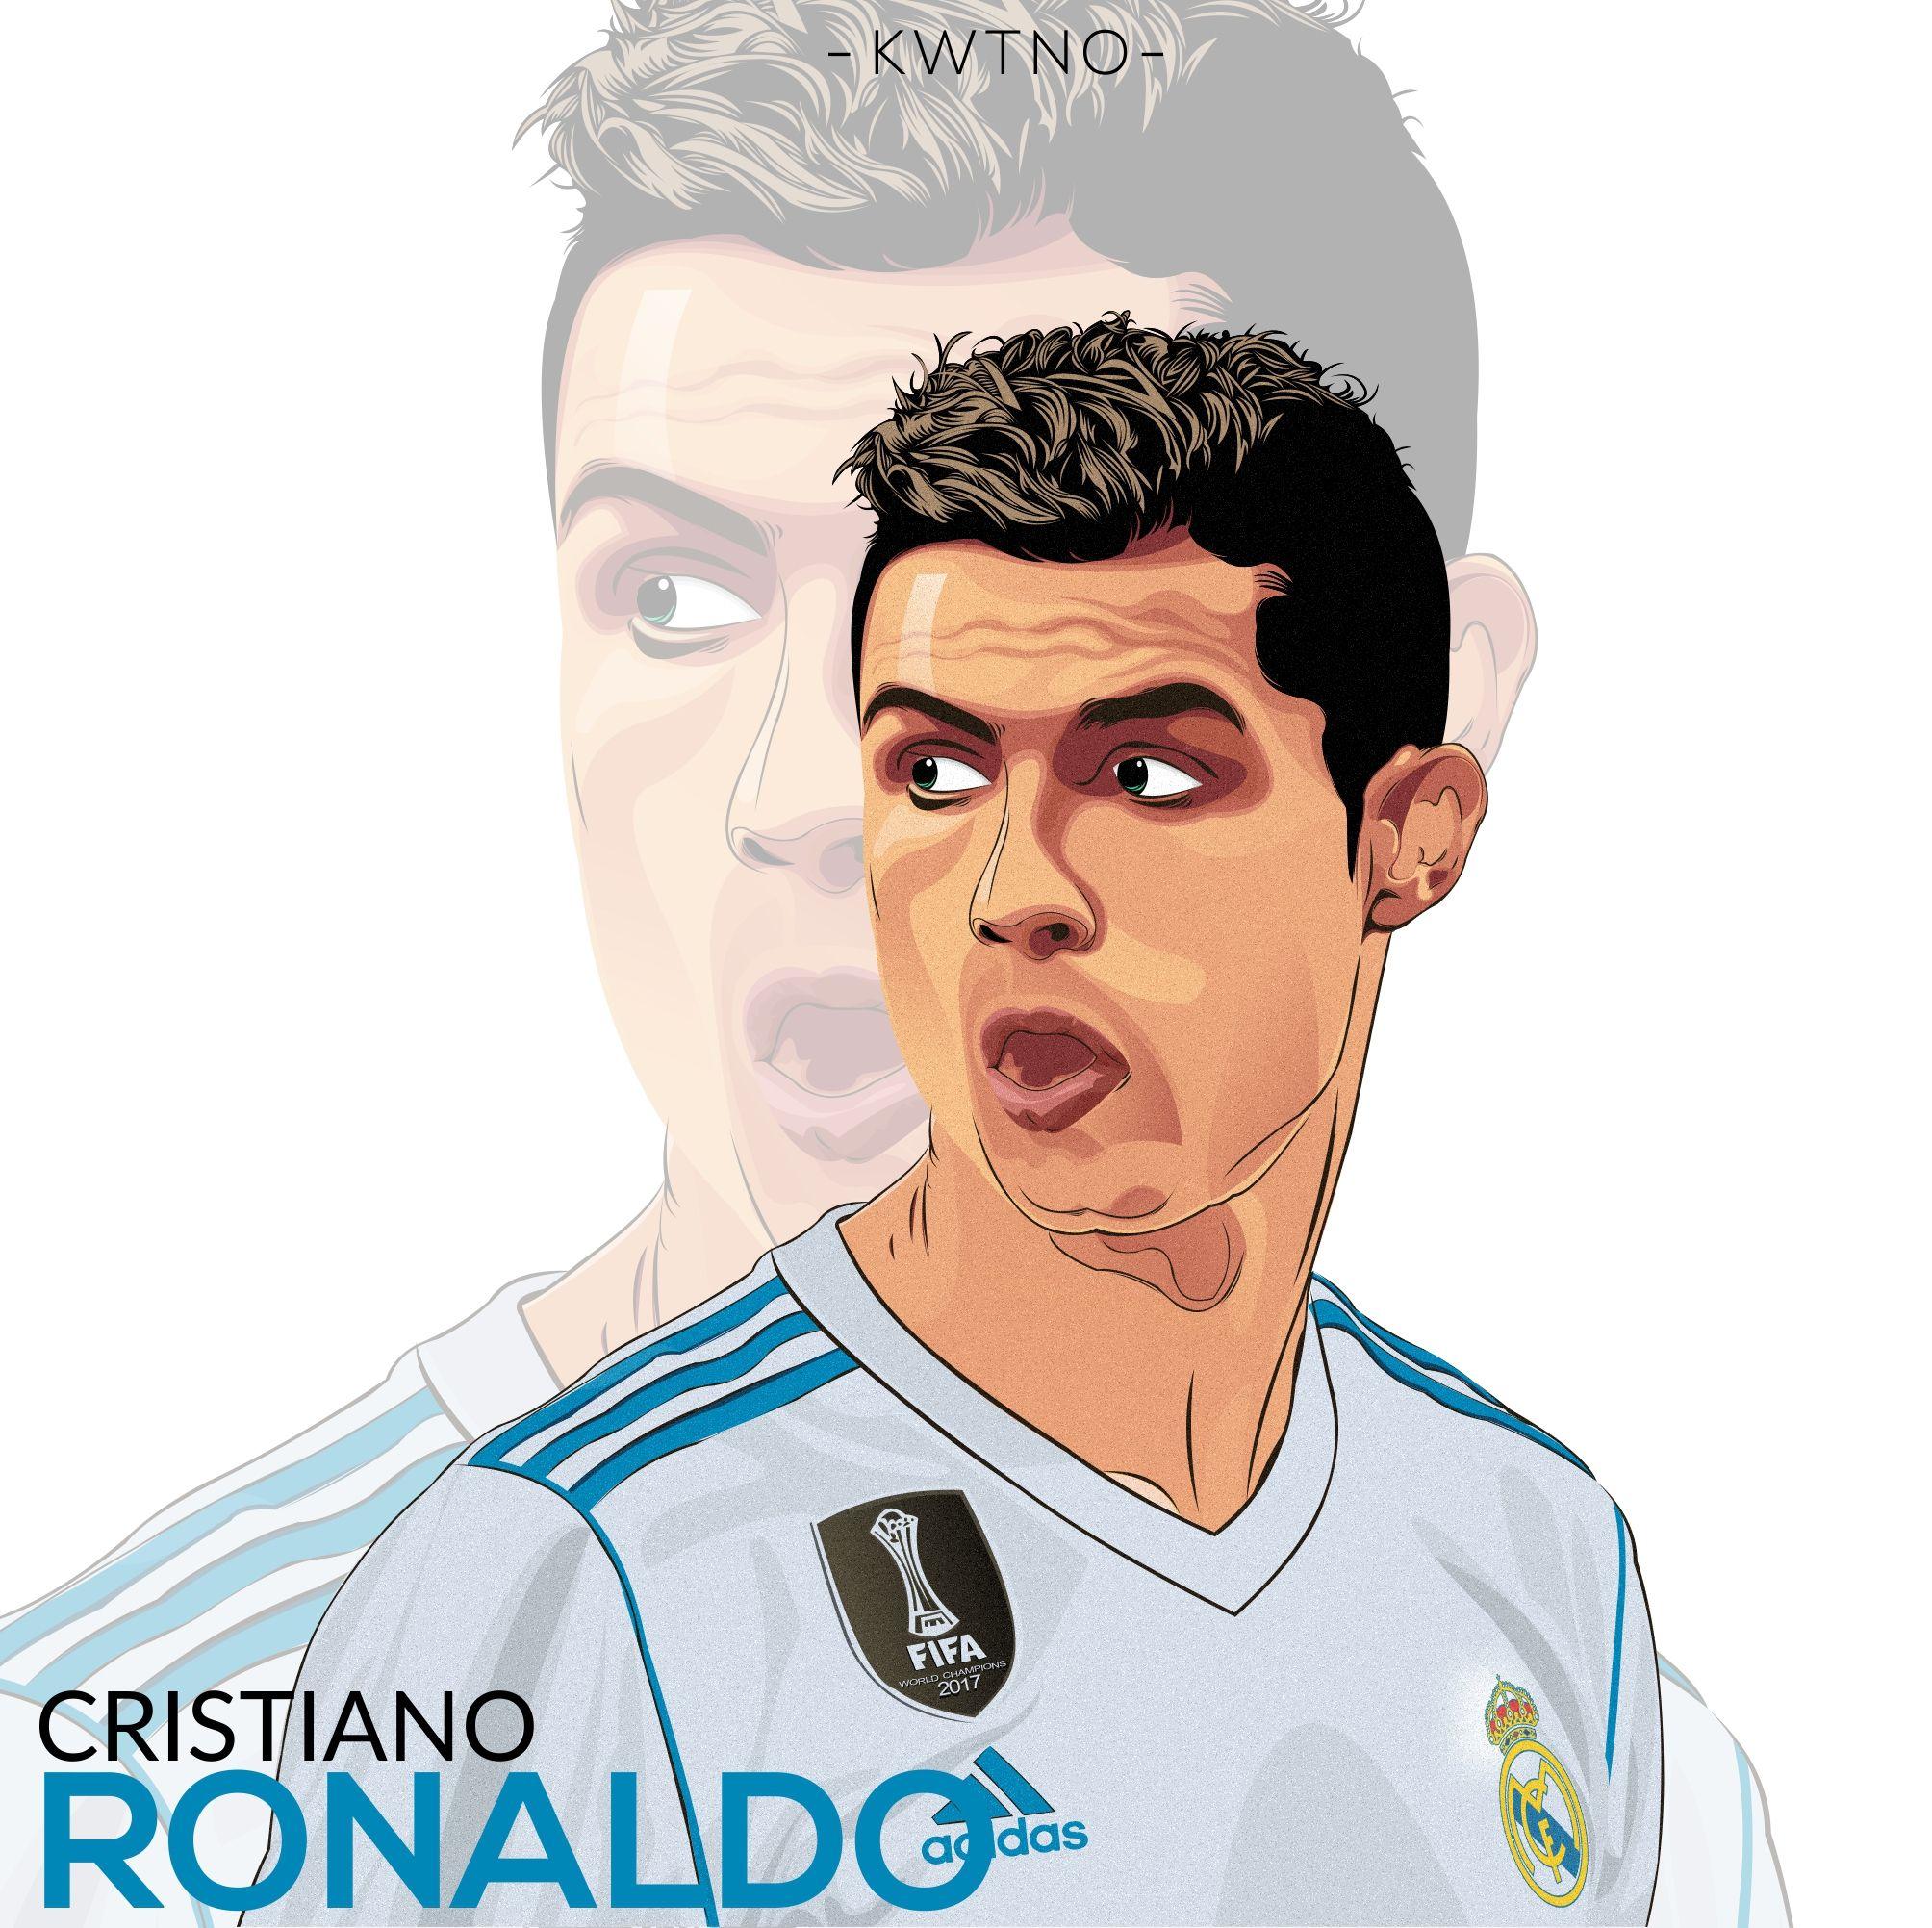 upload. Ronaldo, Cristiano ronaldo